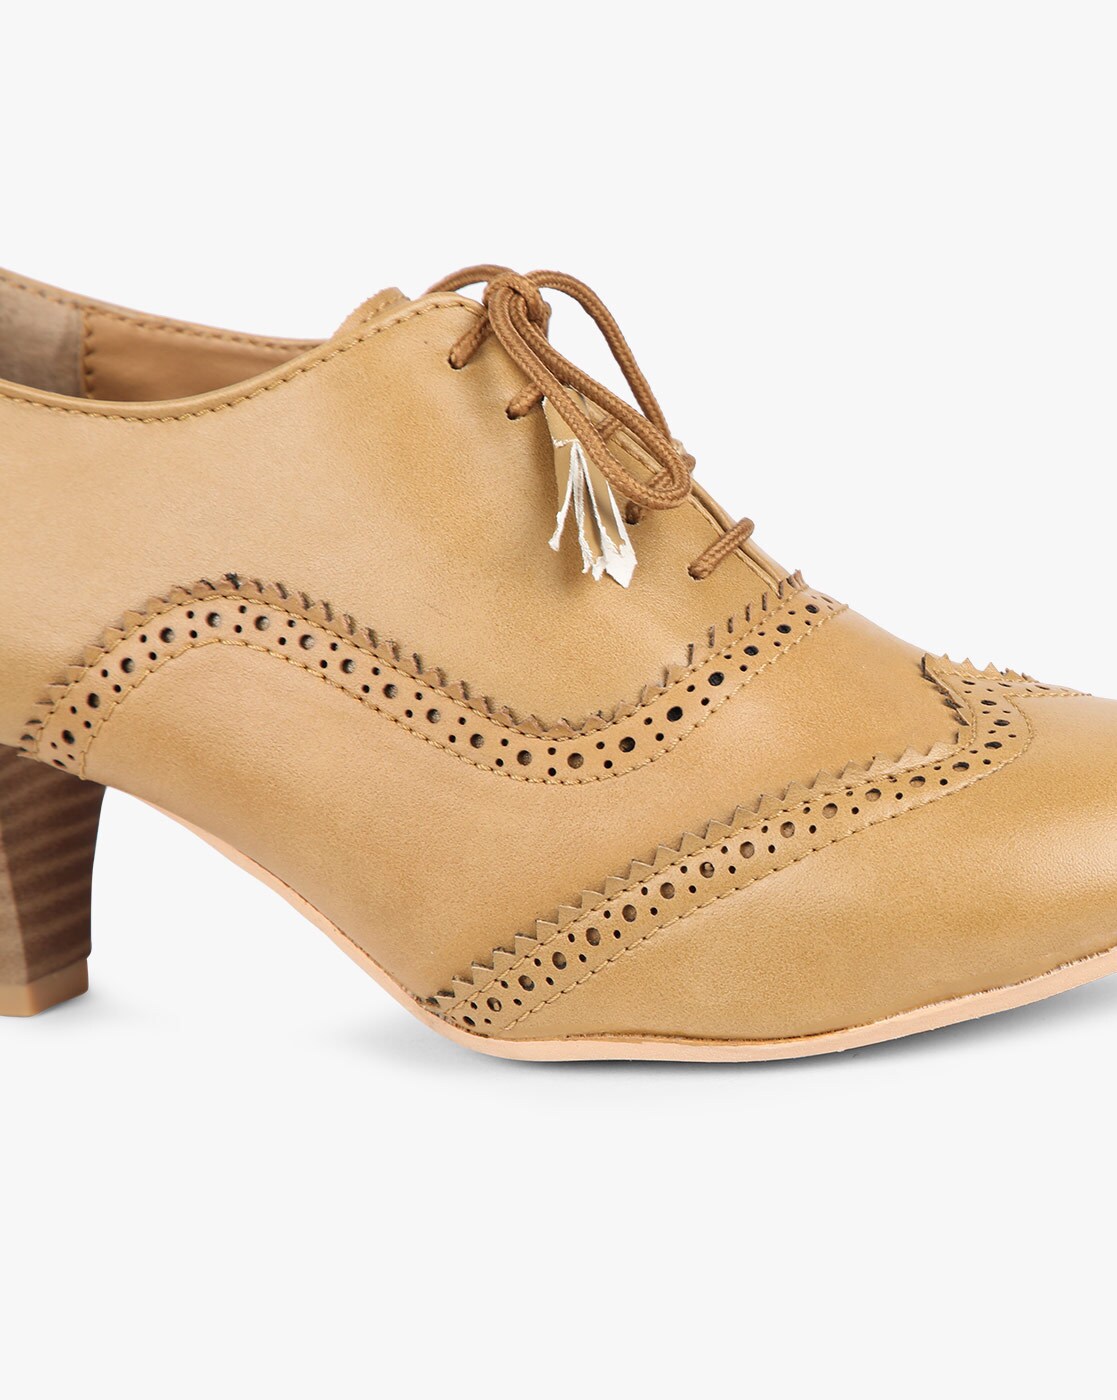 Chunky heel oxfords | Handmade by Women Artisans | Julia Bo - Julia Bo -  Women's Oxfords